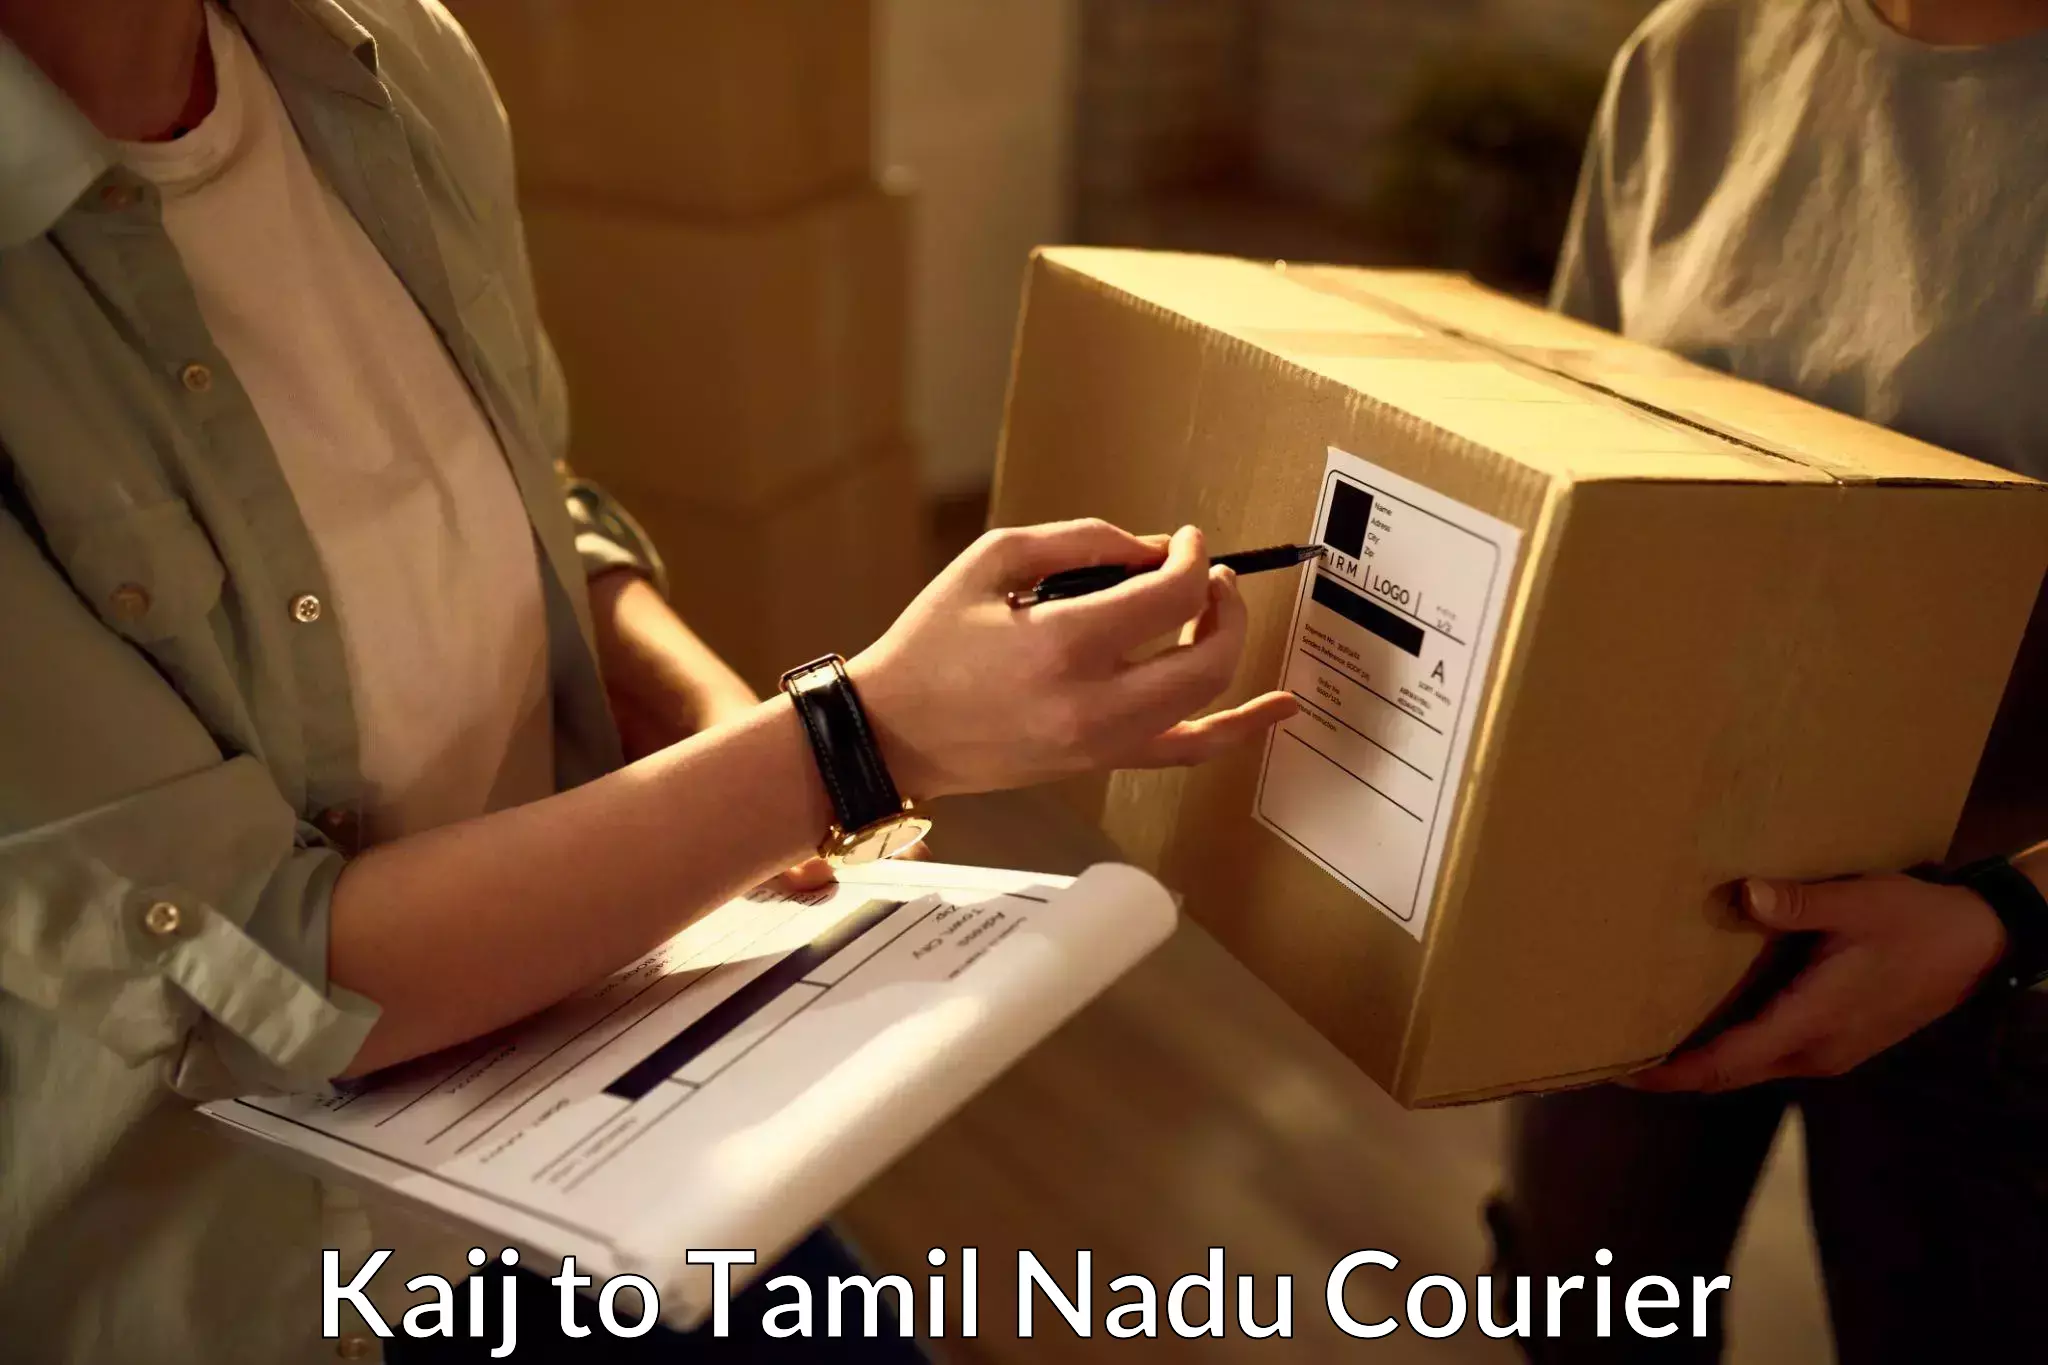 International parcel service Kaij to Kalpakkam